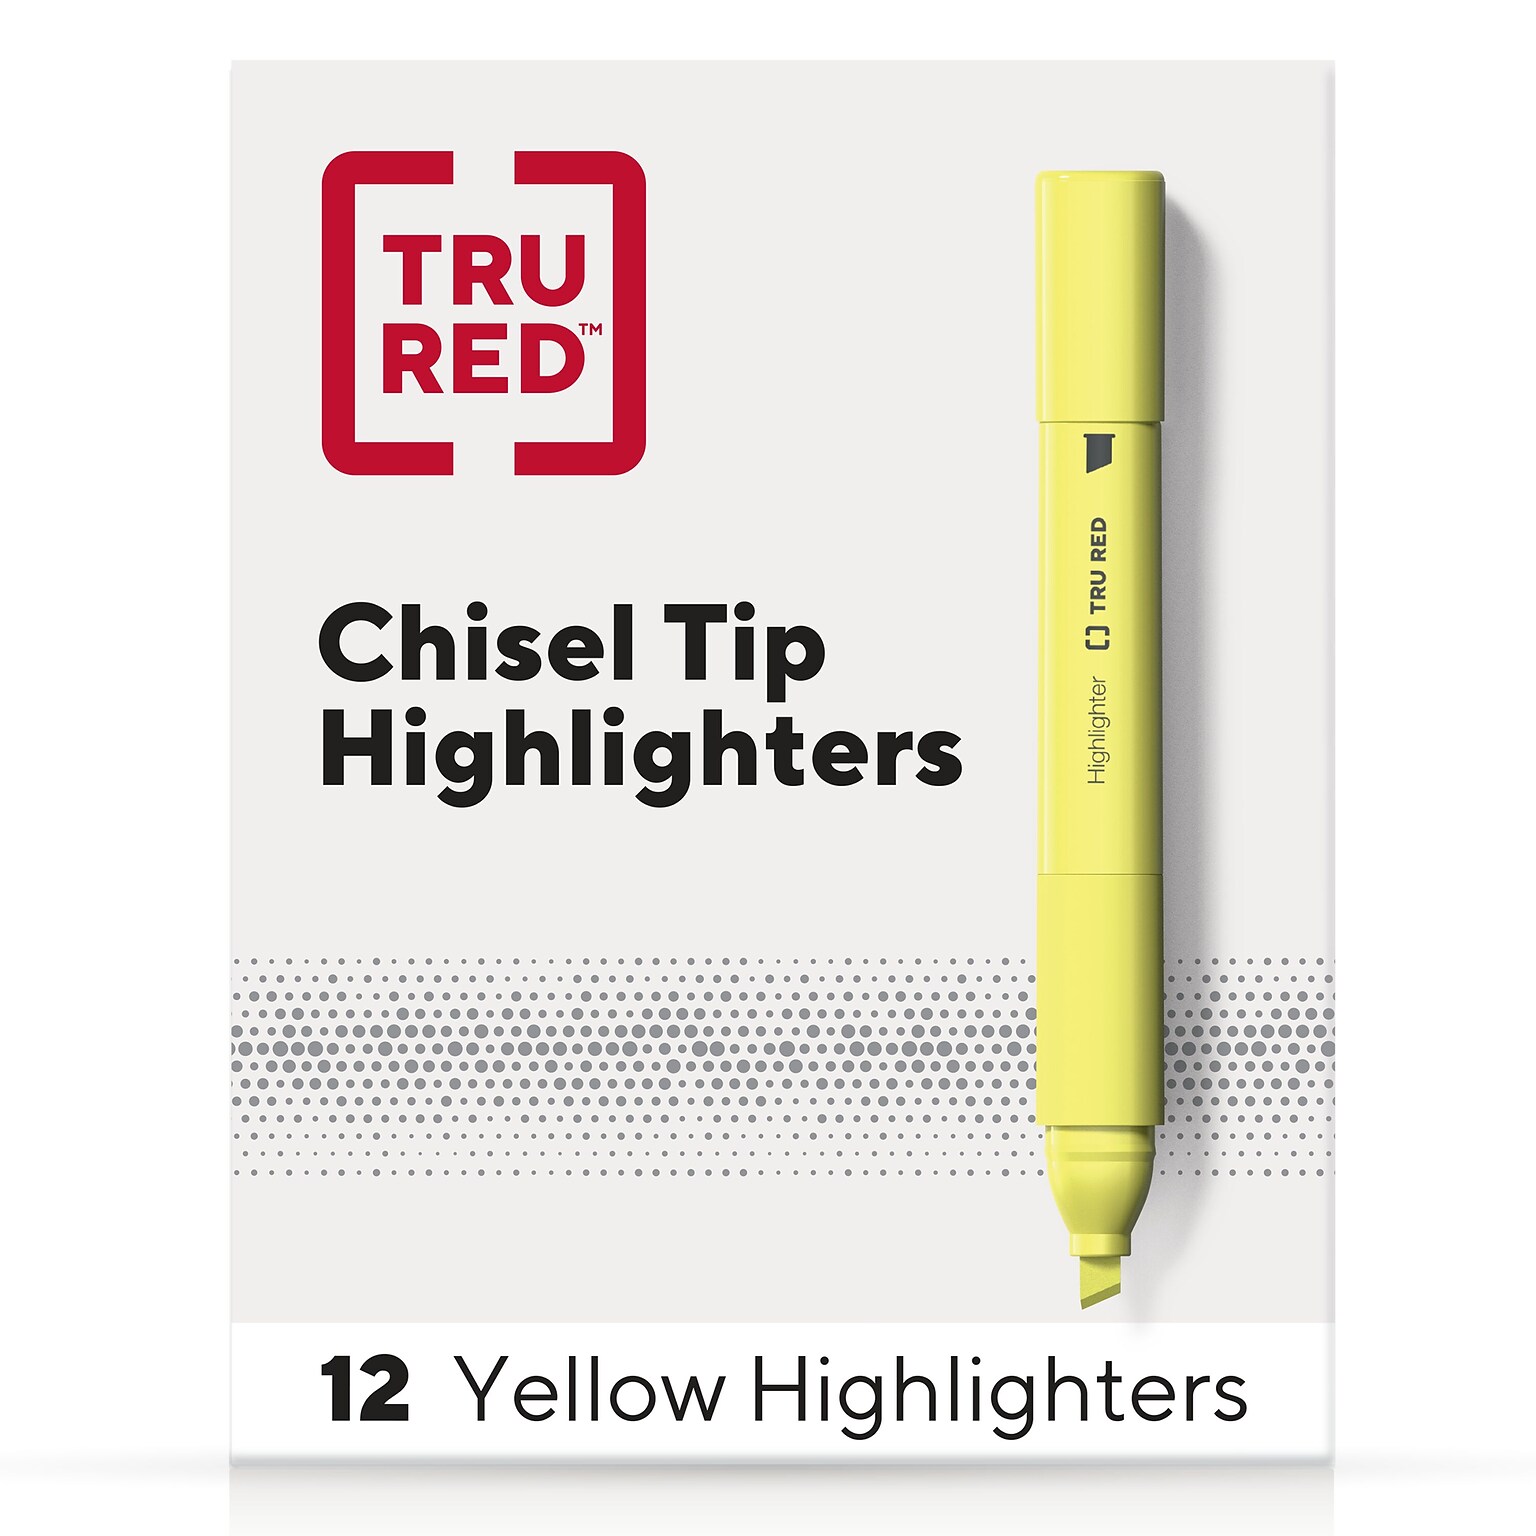 TRU RED™ Tank Highlighter with Grip, Chisel Tip, Yellow, Dozen (TR54579)